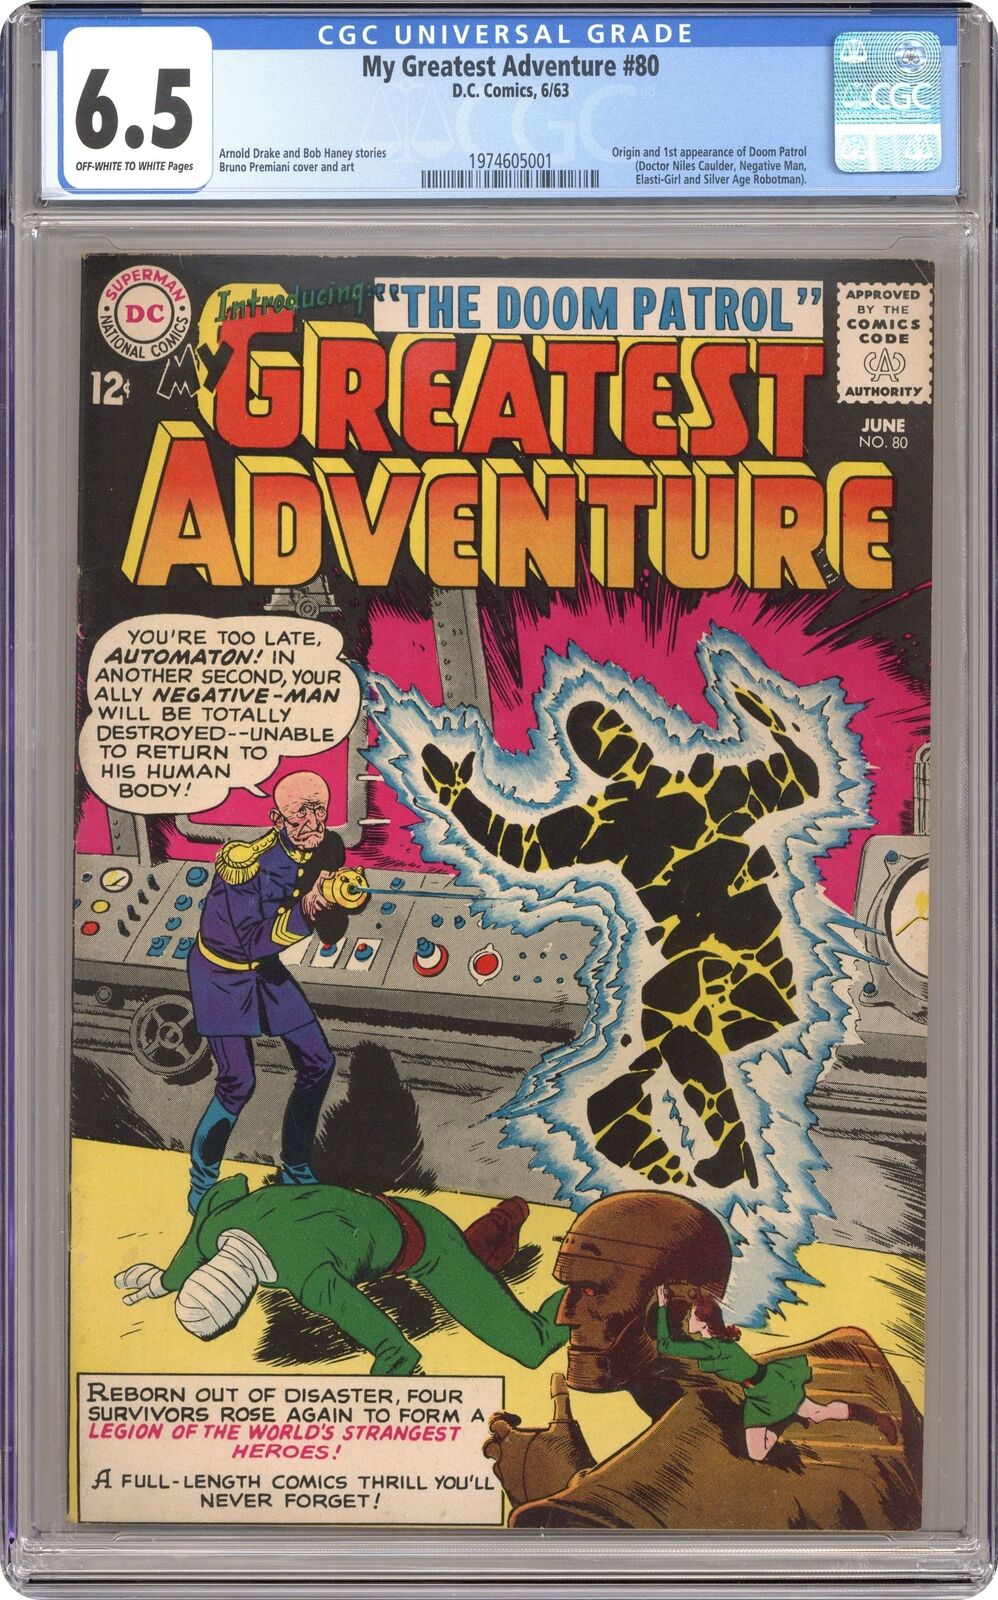 My Greatest Adventure #80 CGC 6.5 1963 1974605001